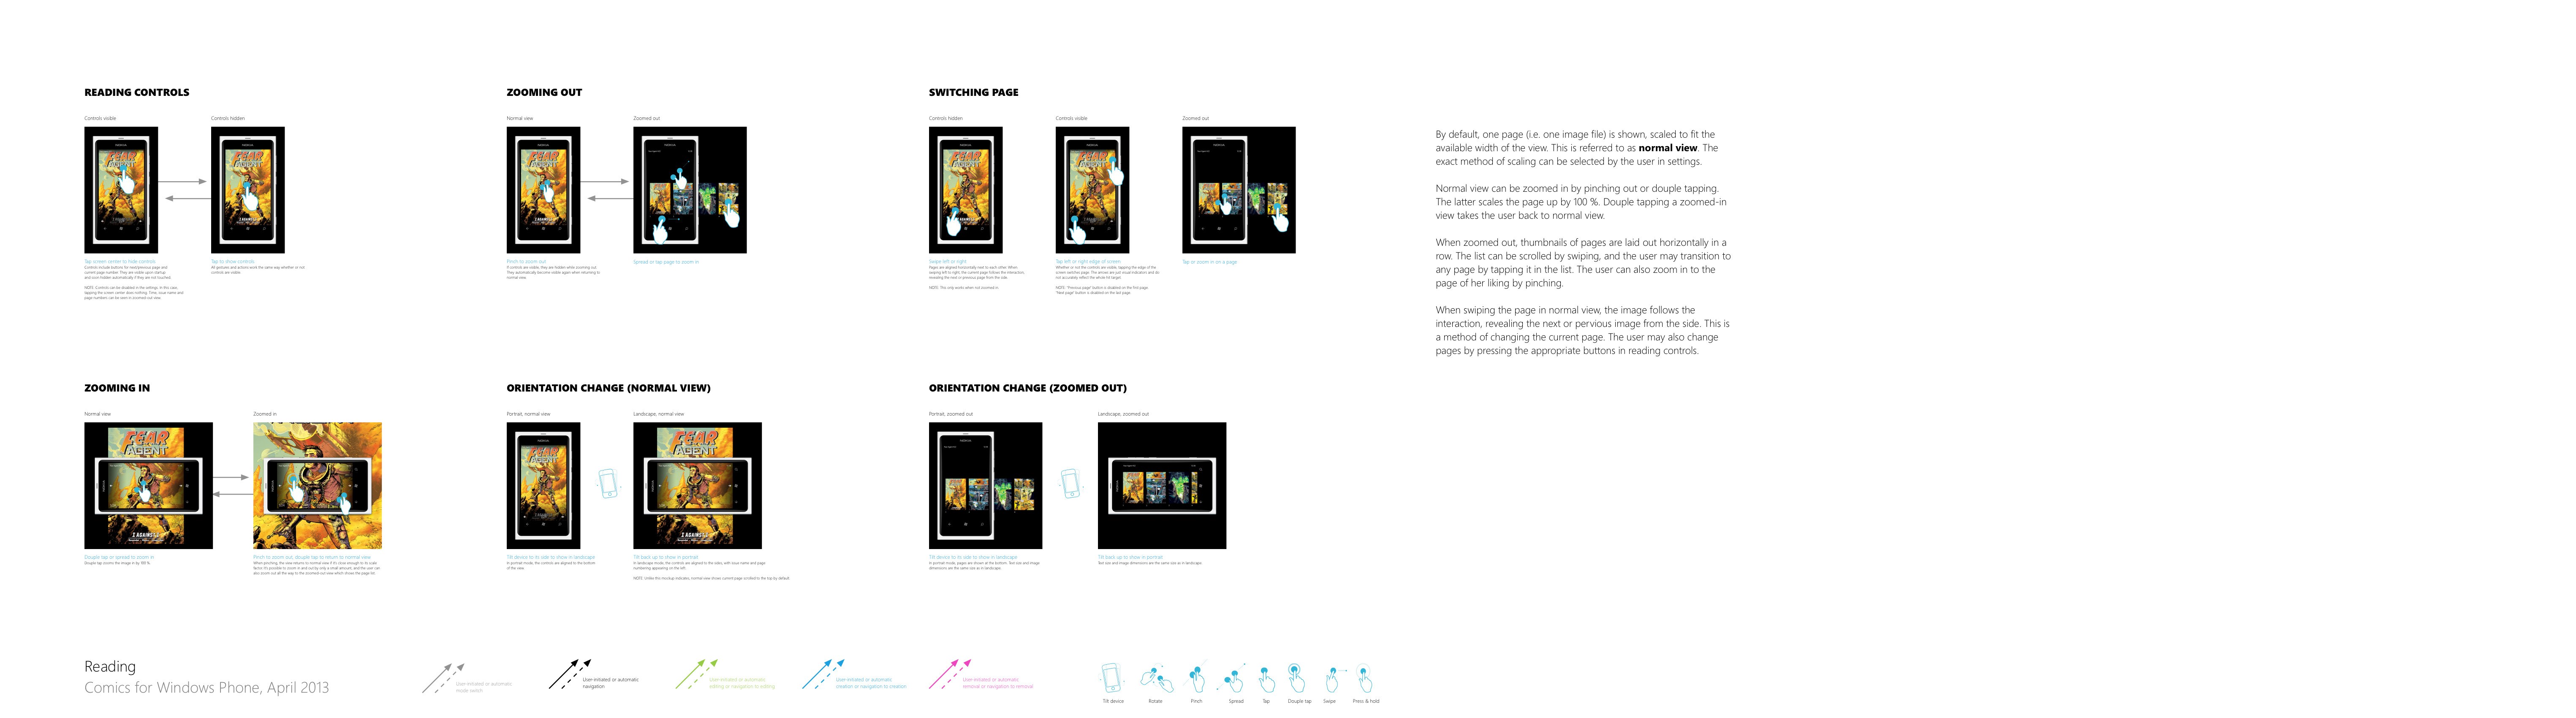 Comics for Windows Phone: Reading flow